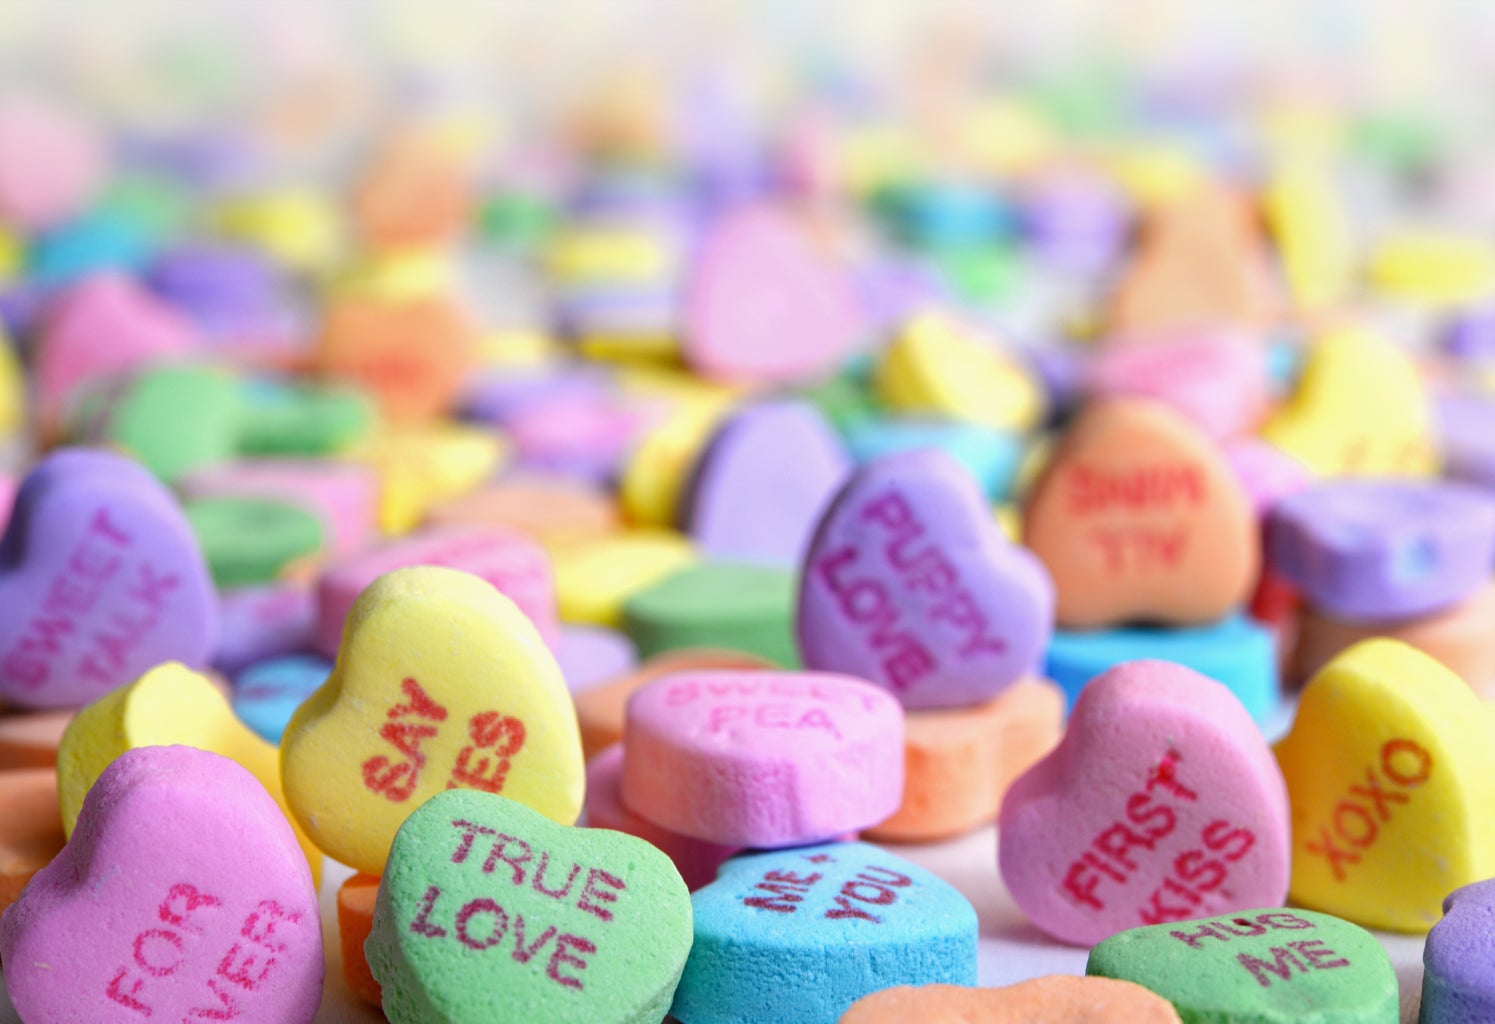 Valentine heart candy